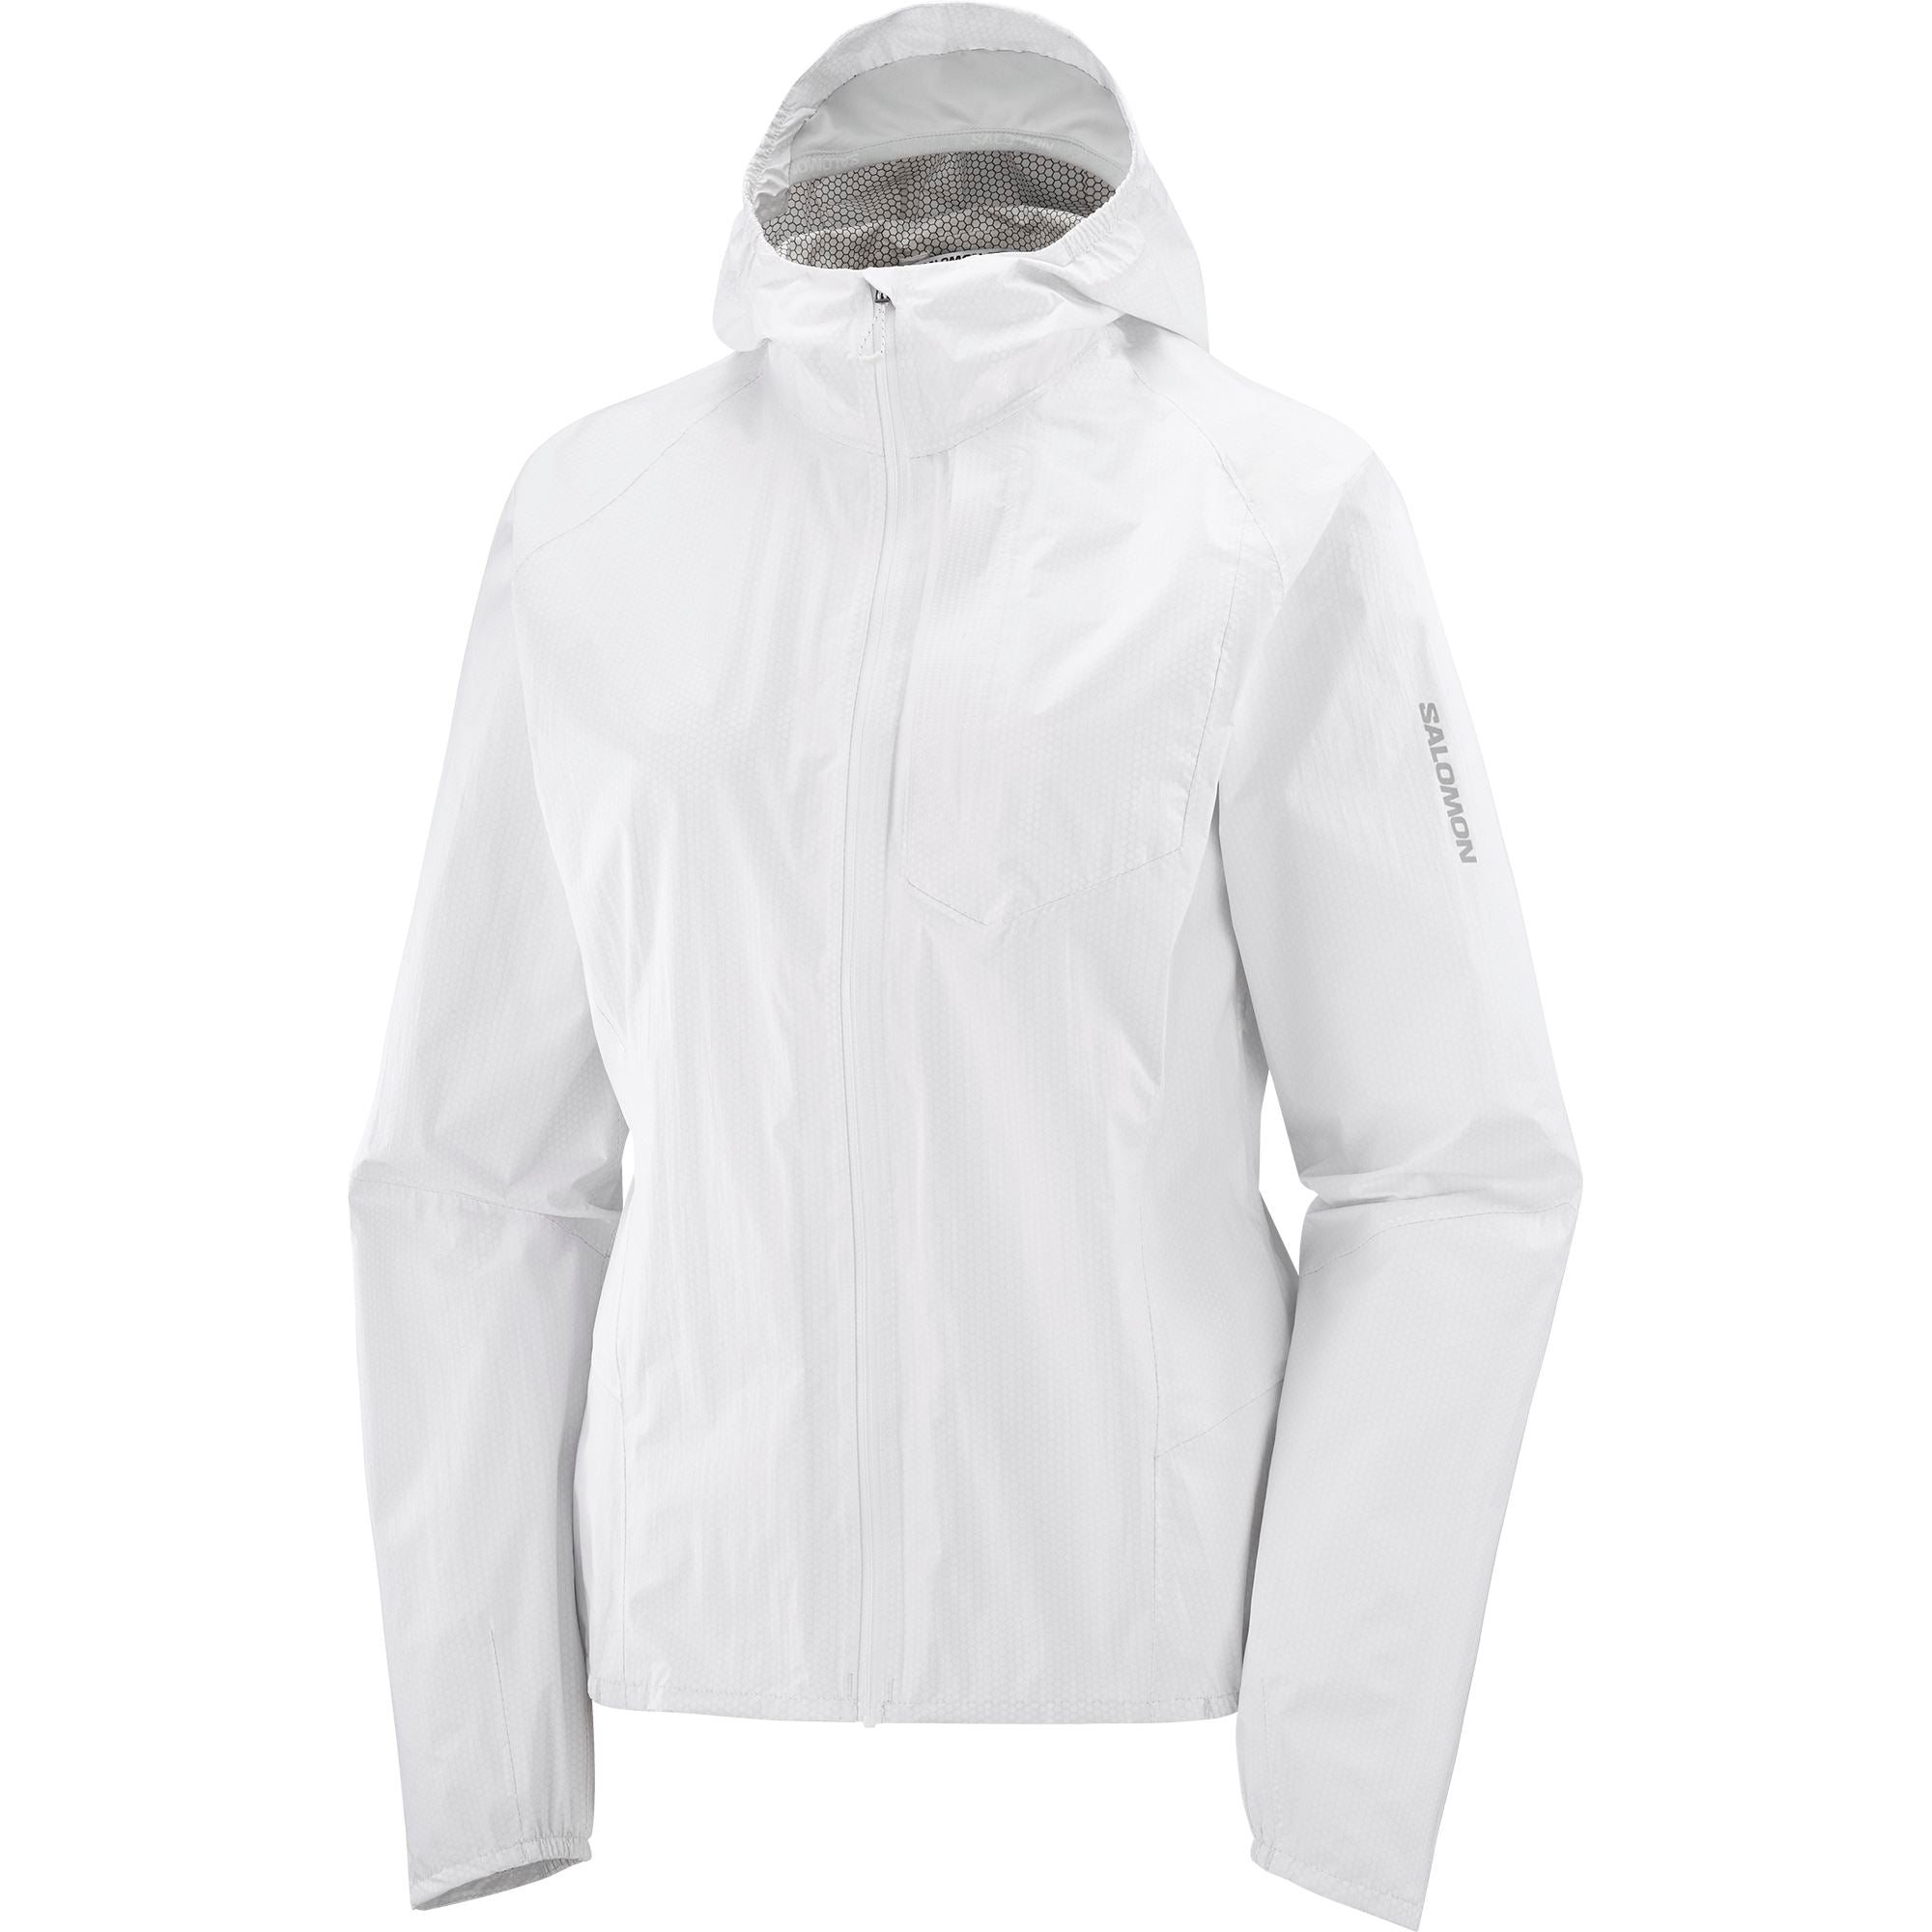 Salomon Bonatti Waterproof Women's Shell Jacket White XS 